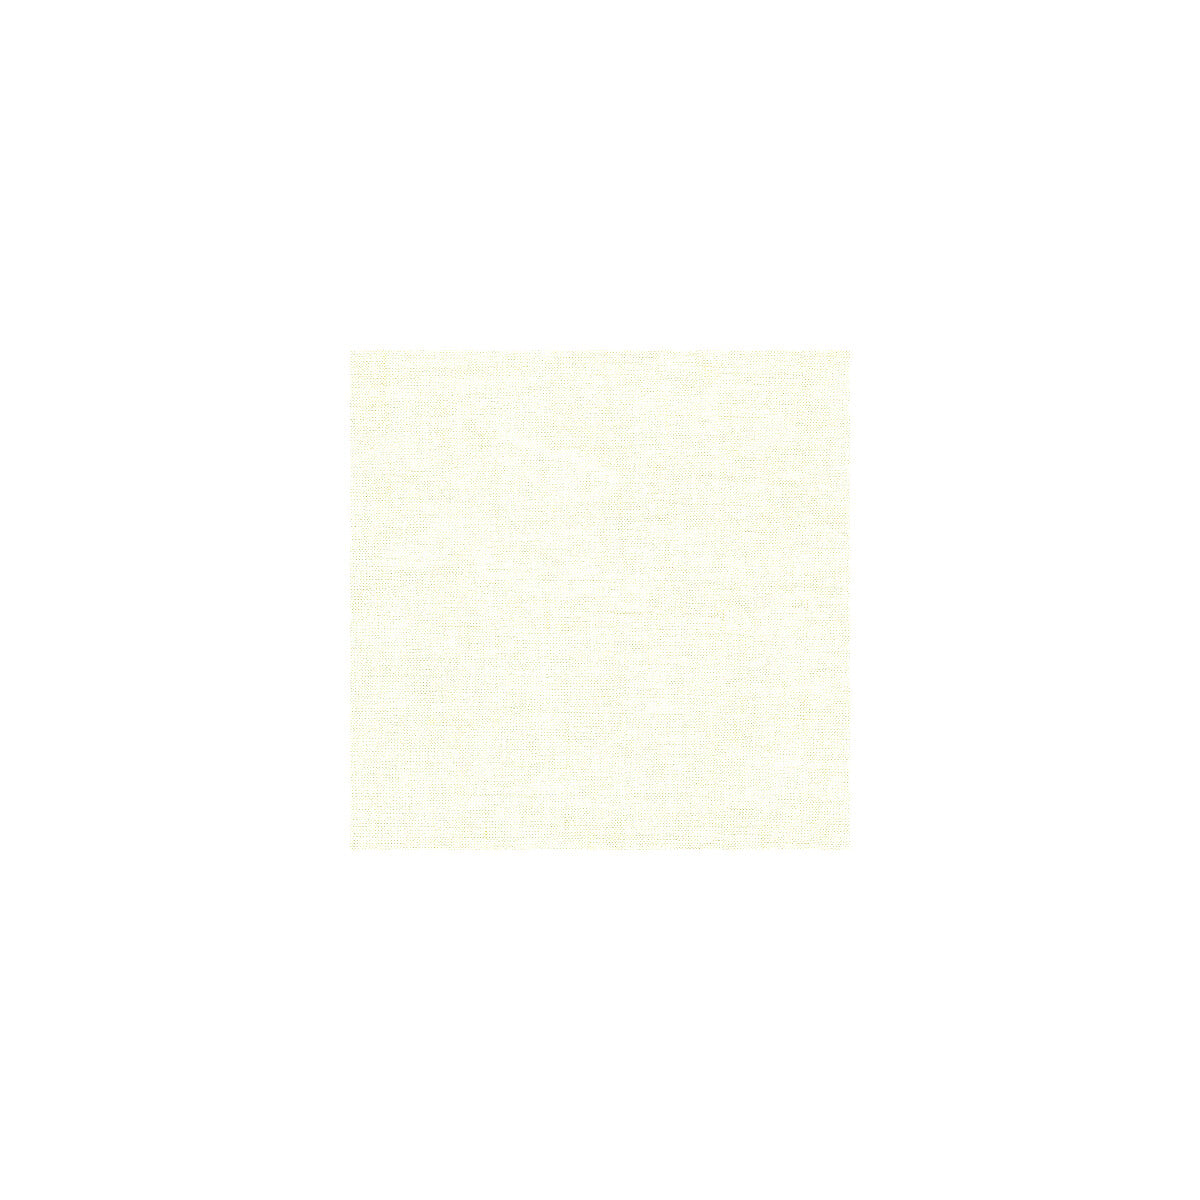 Breezy Linen fabric in sugar color - pattern 9726.1.0 - by Kravet Basics